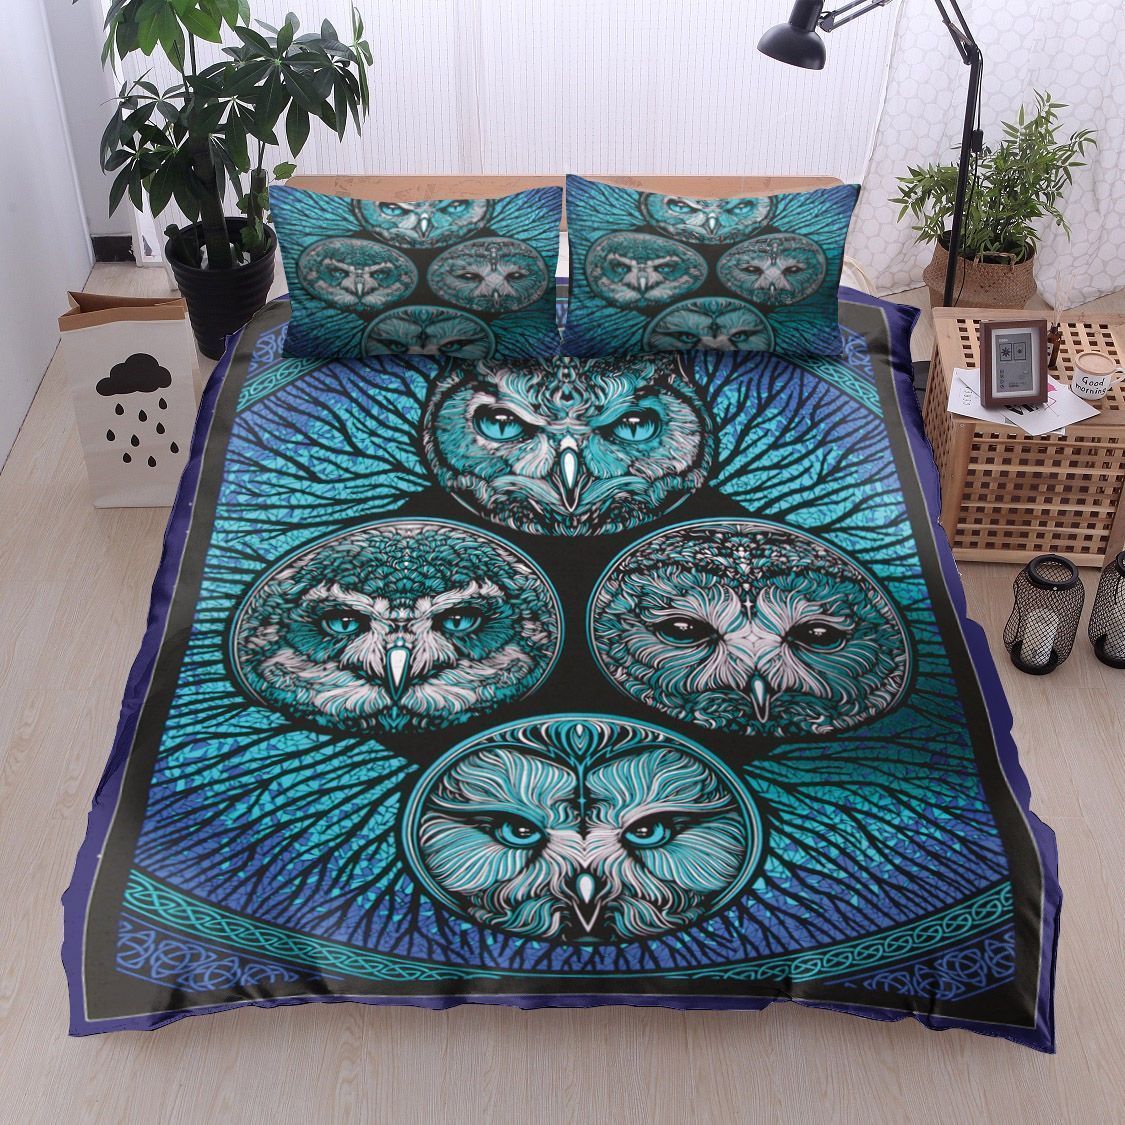 Owl Cotton Bed Sheets Spread Comforter Duvet Cover Bedding Sets